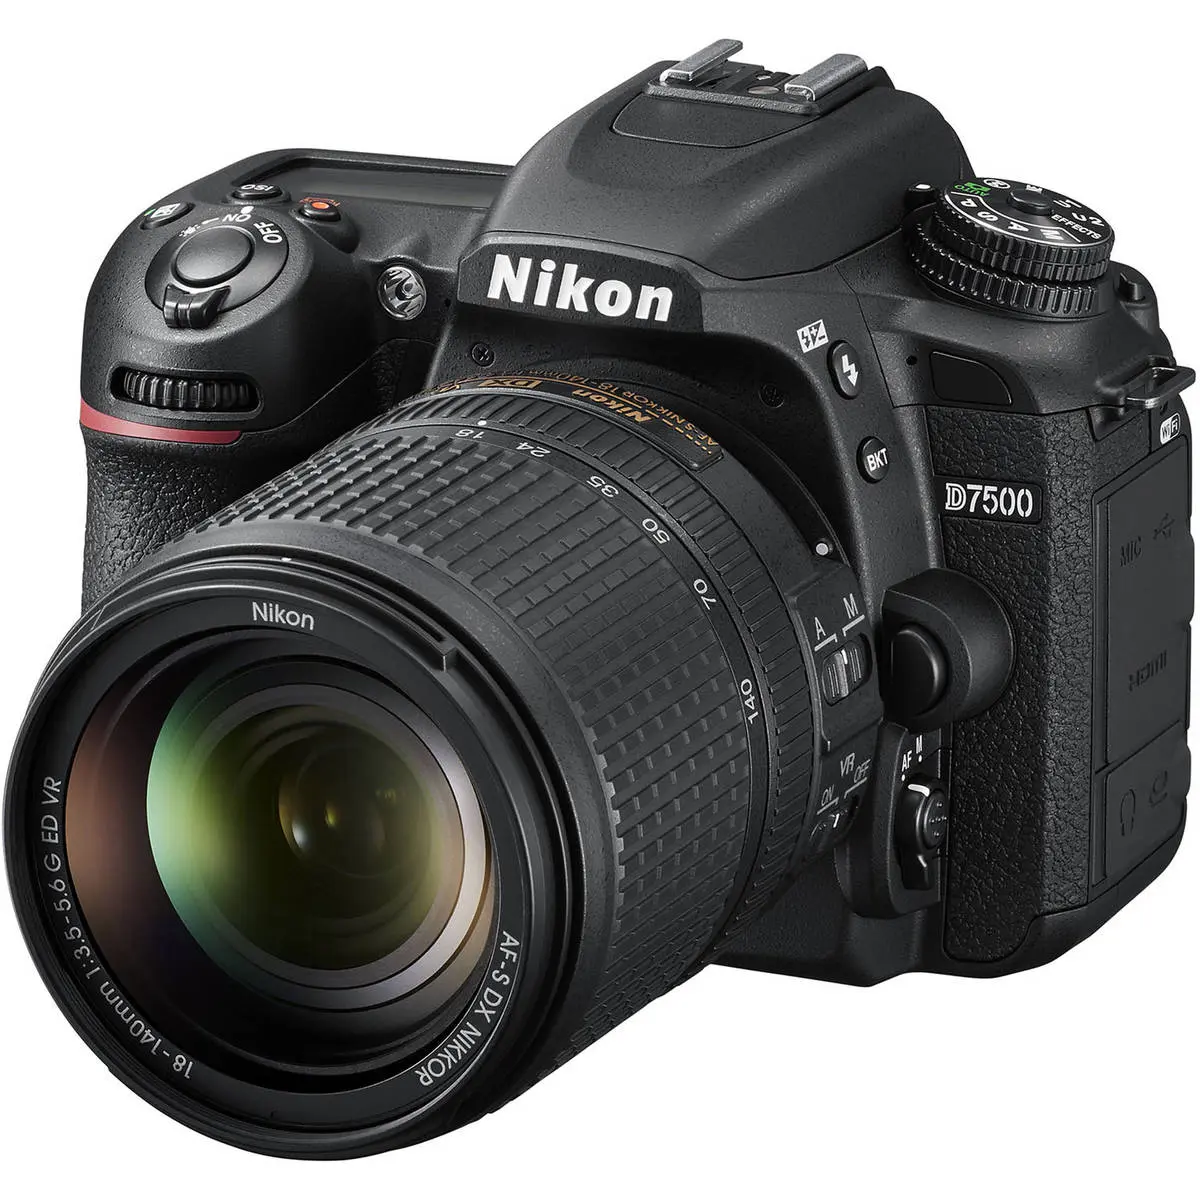 Nikon D7500 18-140 kit 20.9MP 4K UltraHD Digital SLR Camera